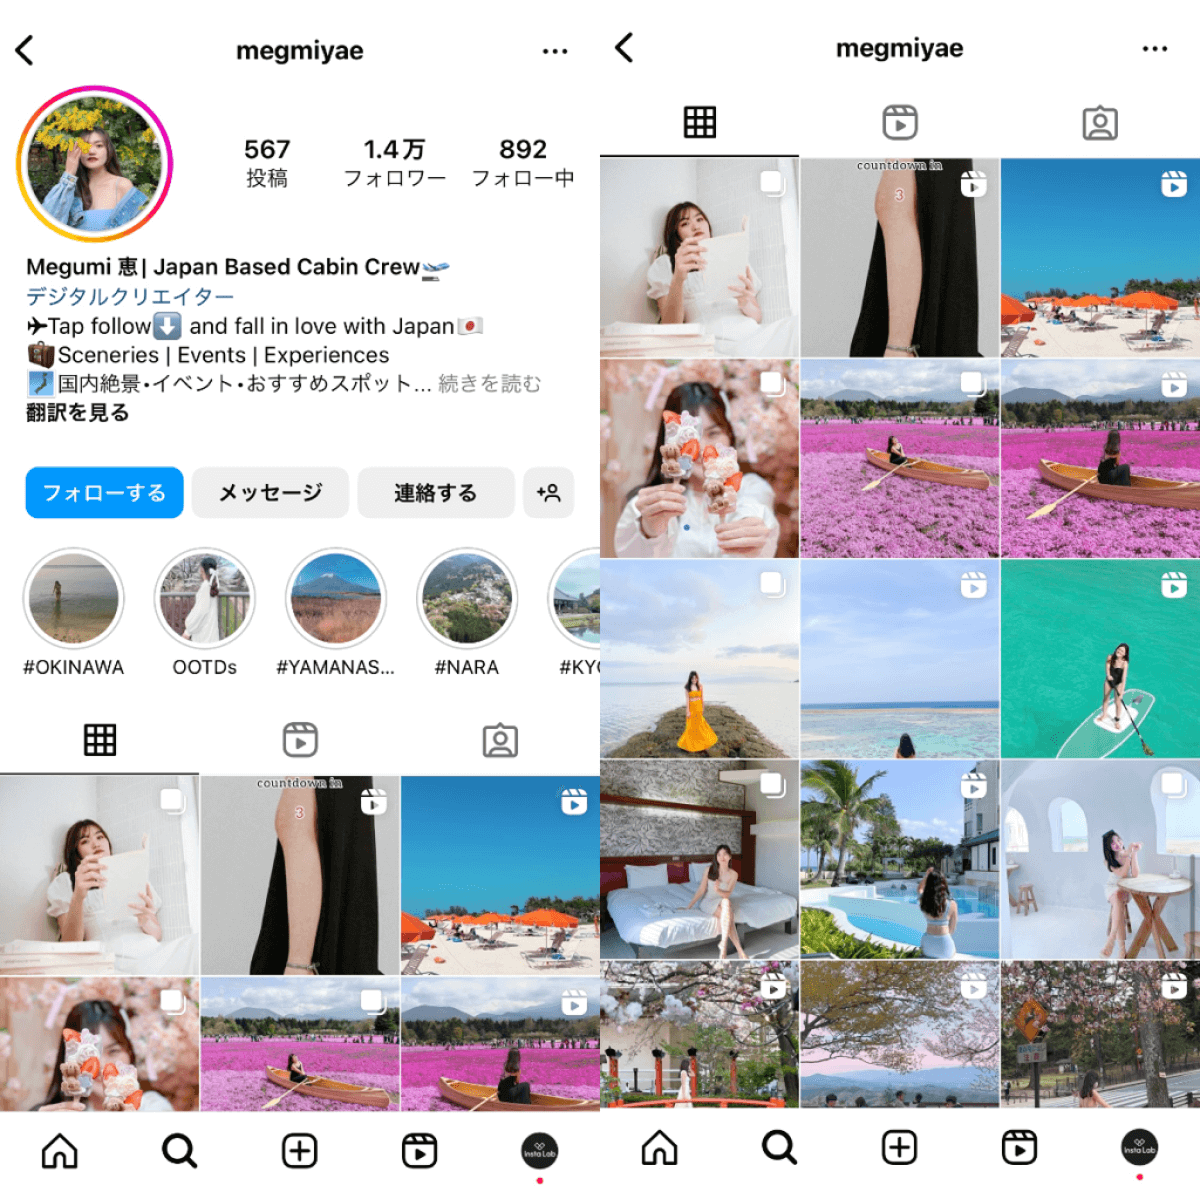 instagram-account-megmiyae